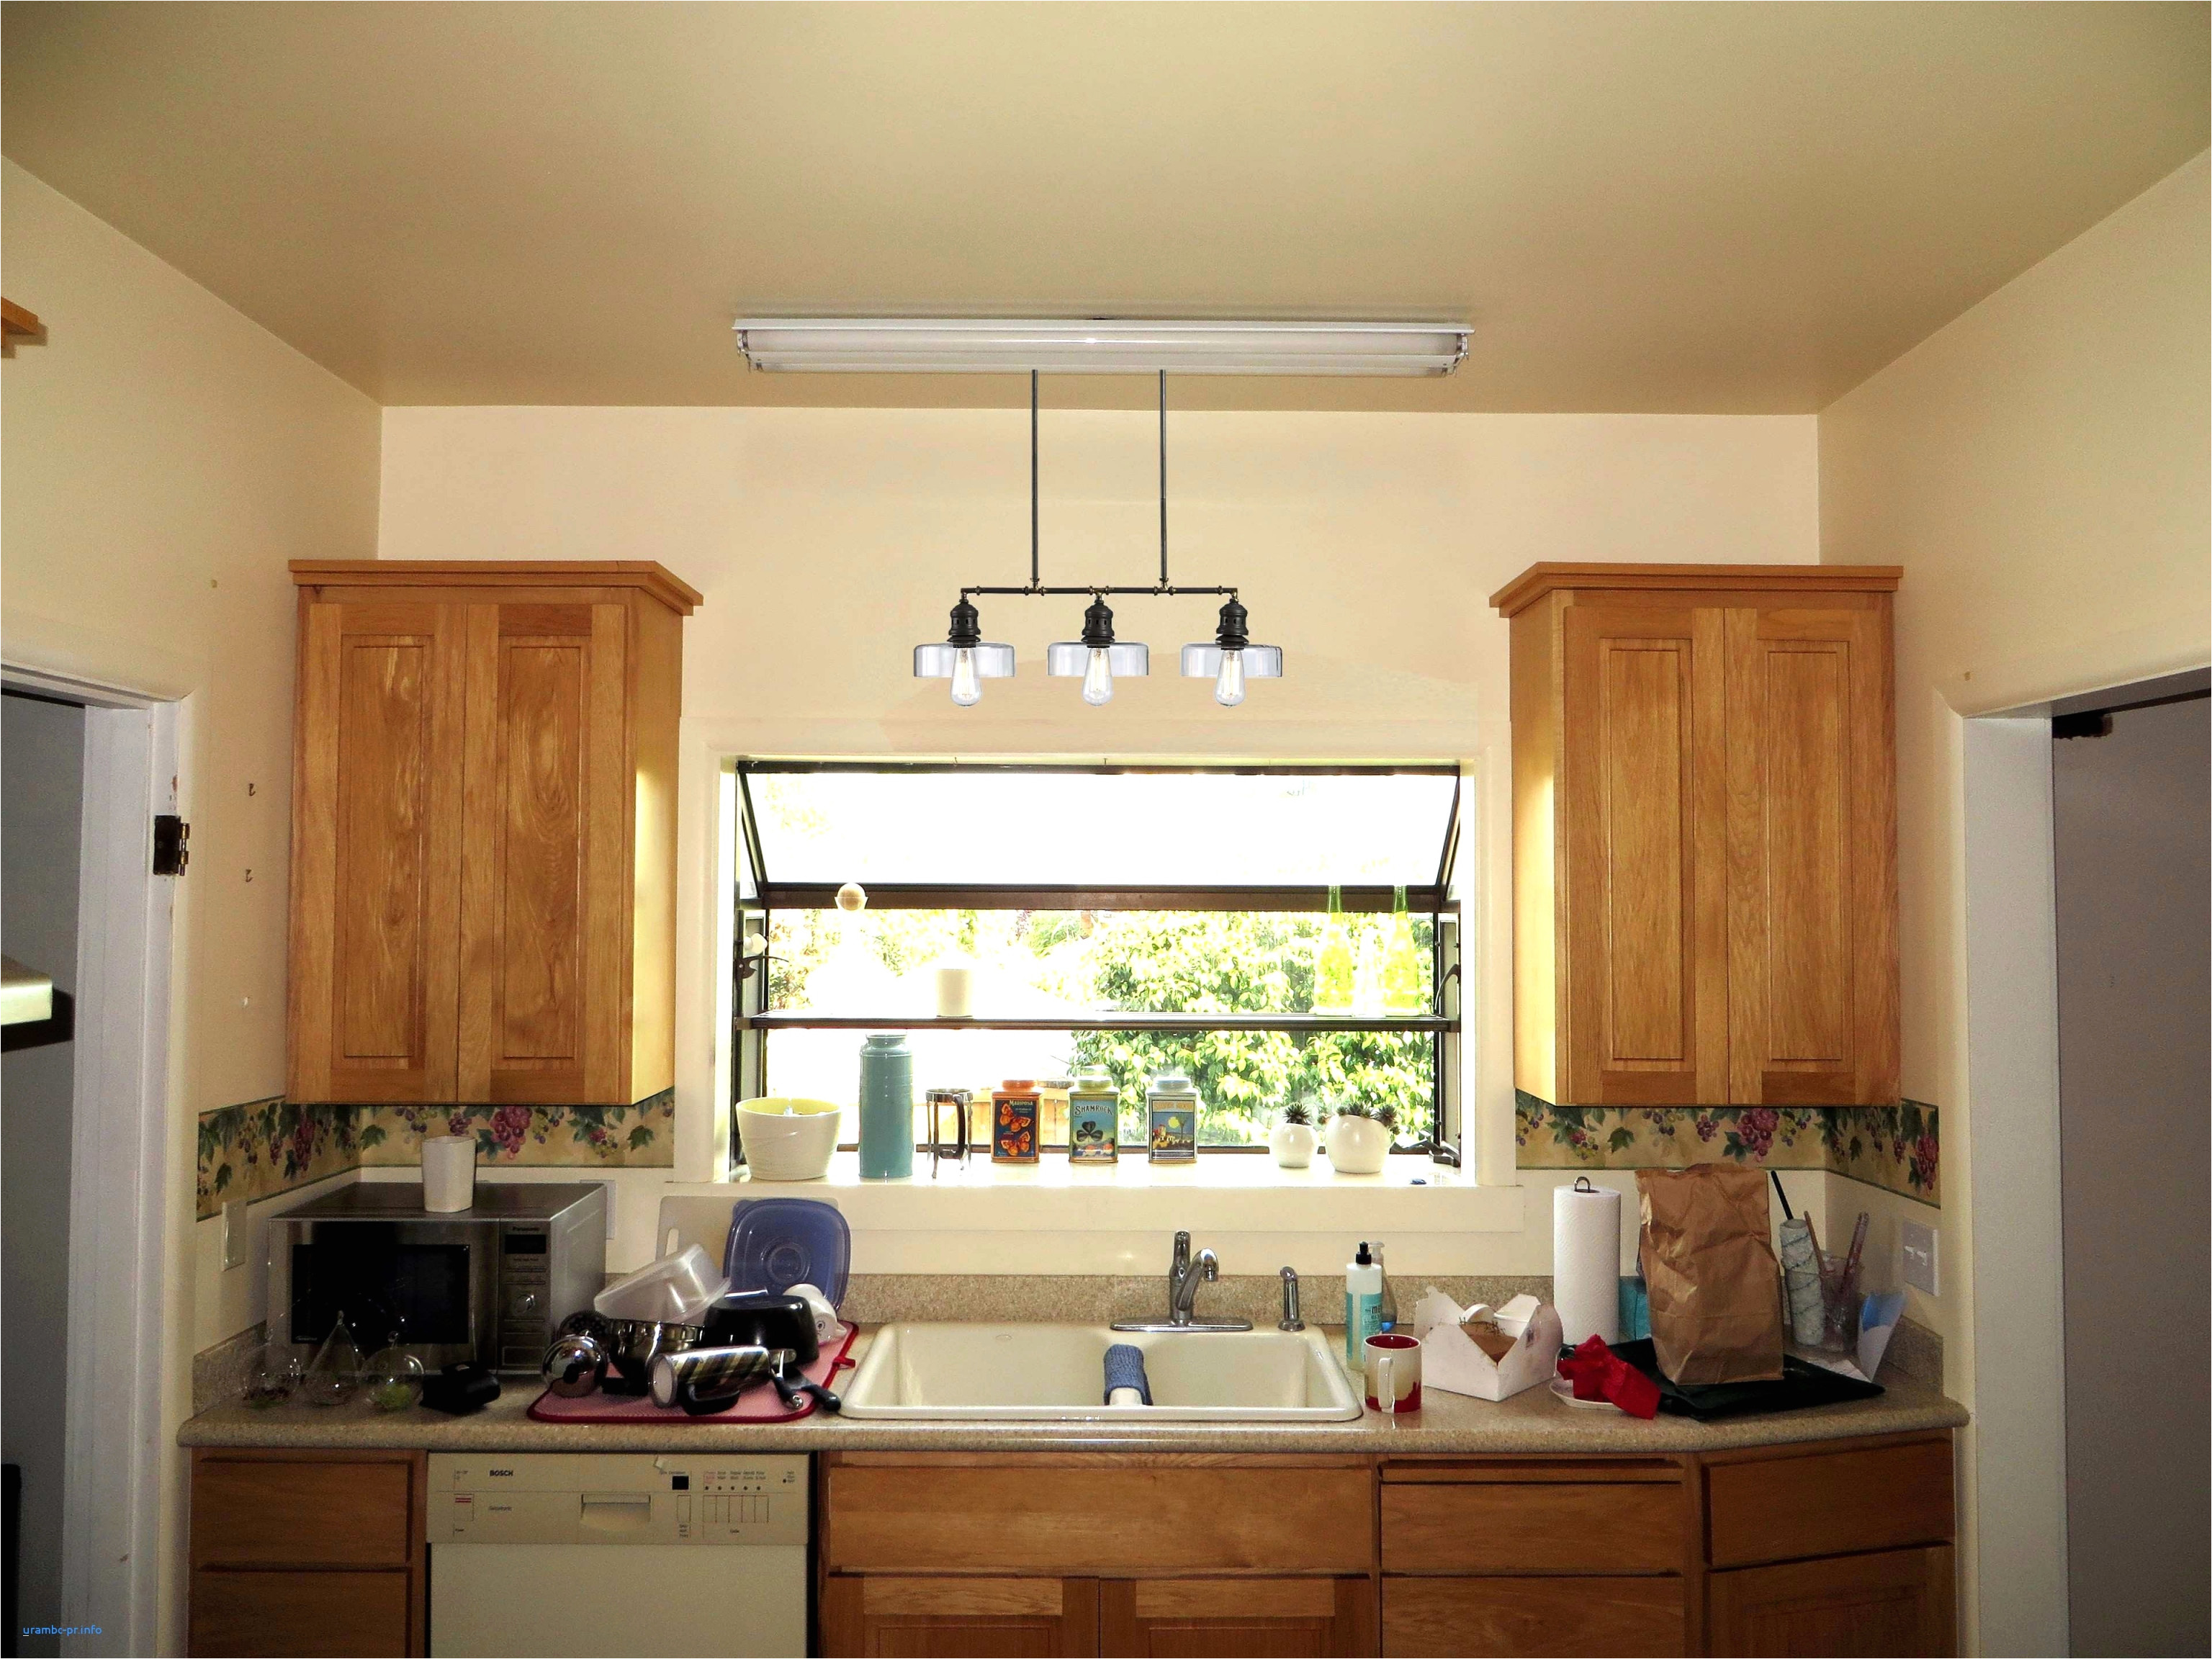 overhead lighting kitchen fresh long kitchen lights fresh h sink installing a kitchen strainer i 0d